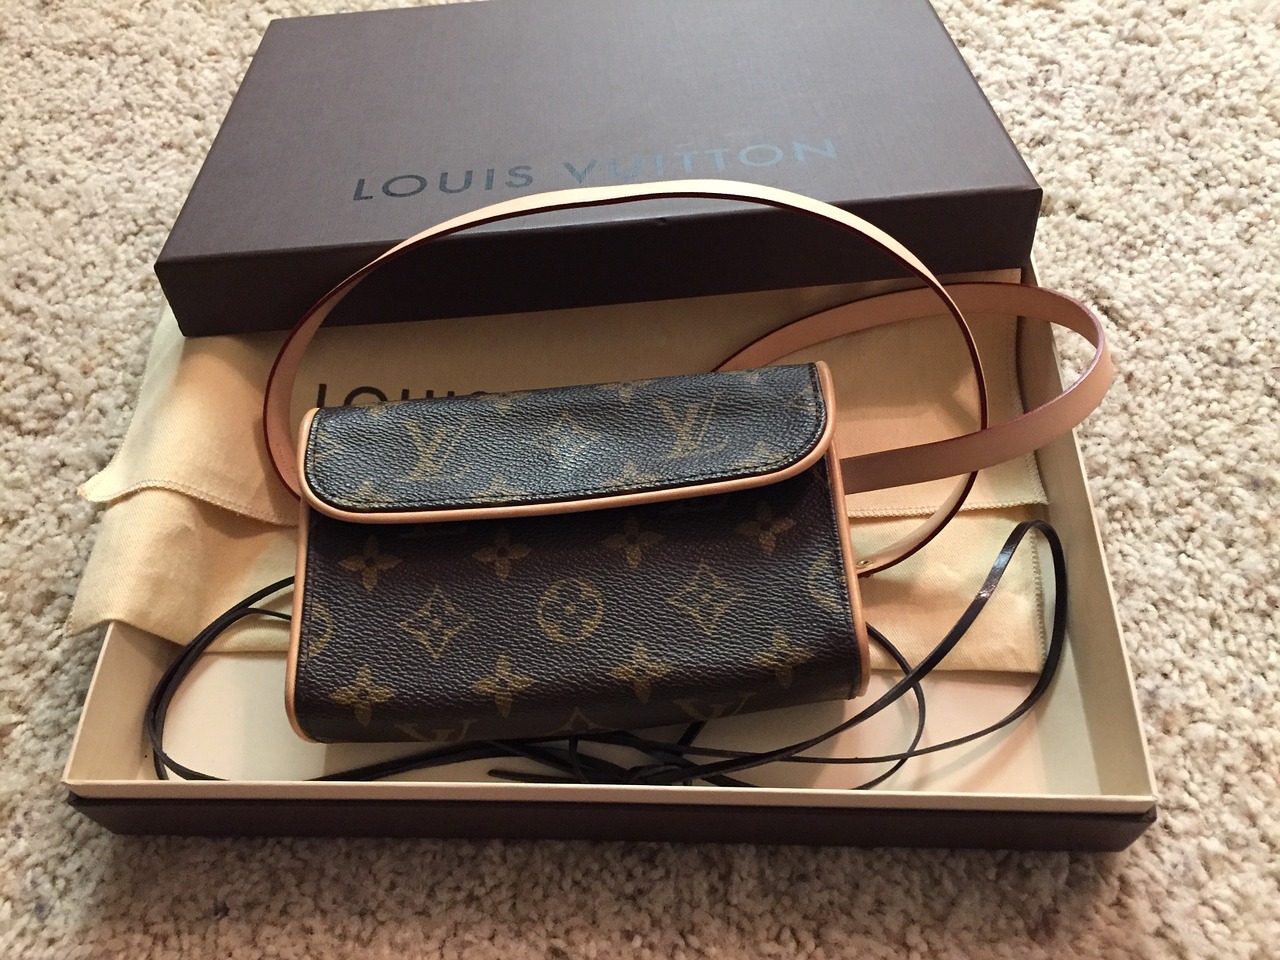 How to Choose a Louis Vuitton Bag